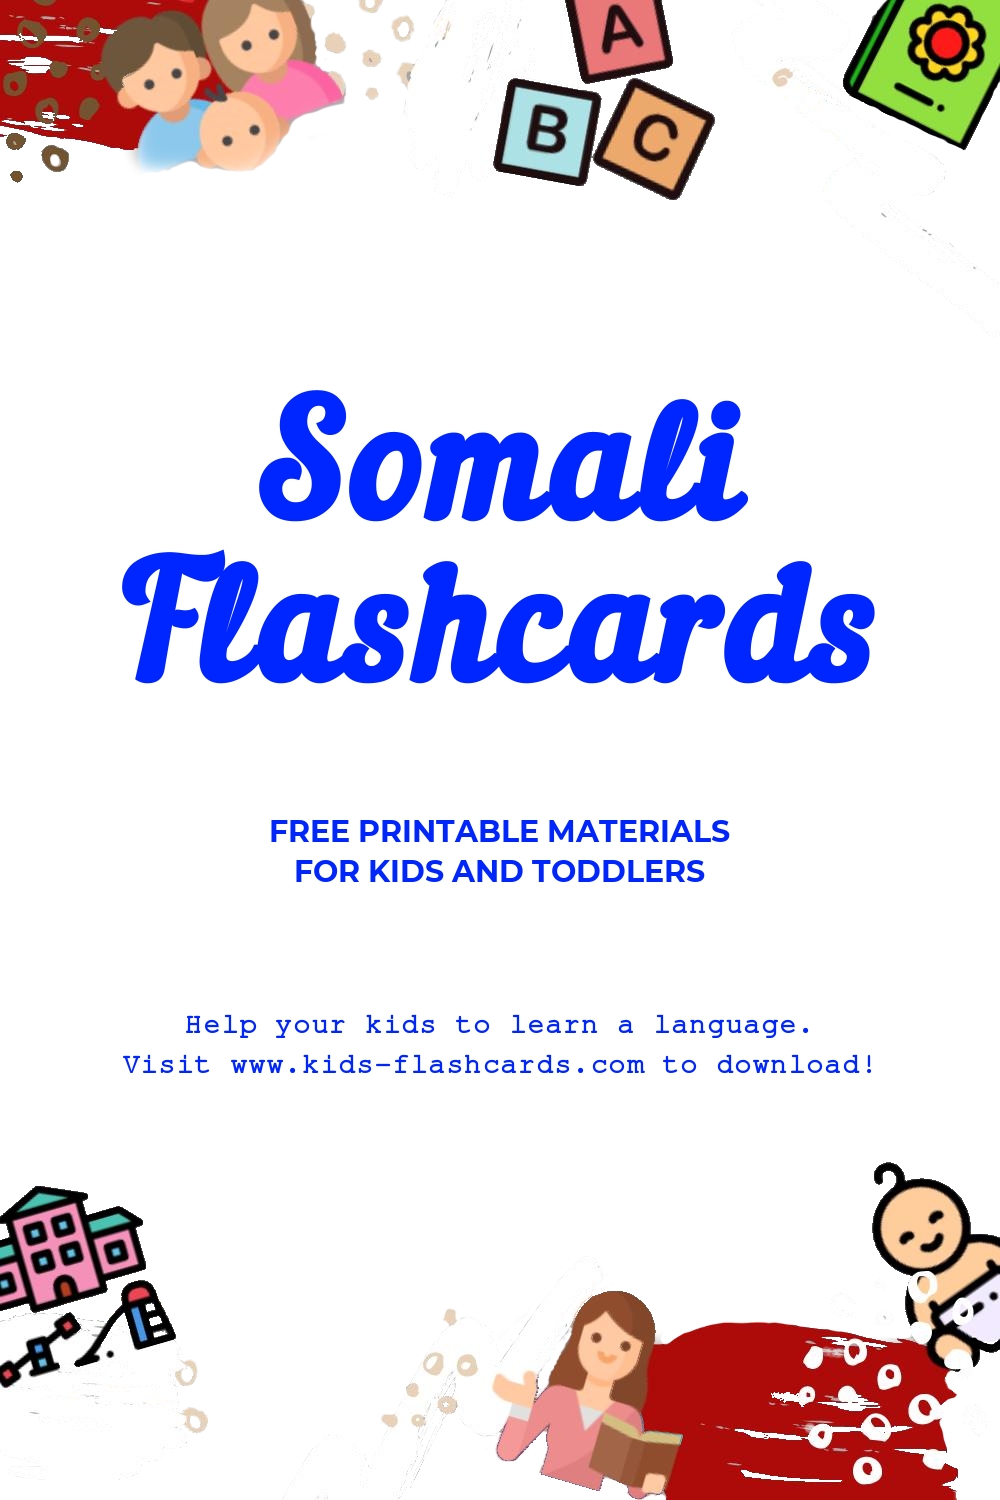 Worksheets to learn Somali language